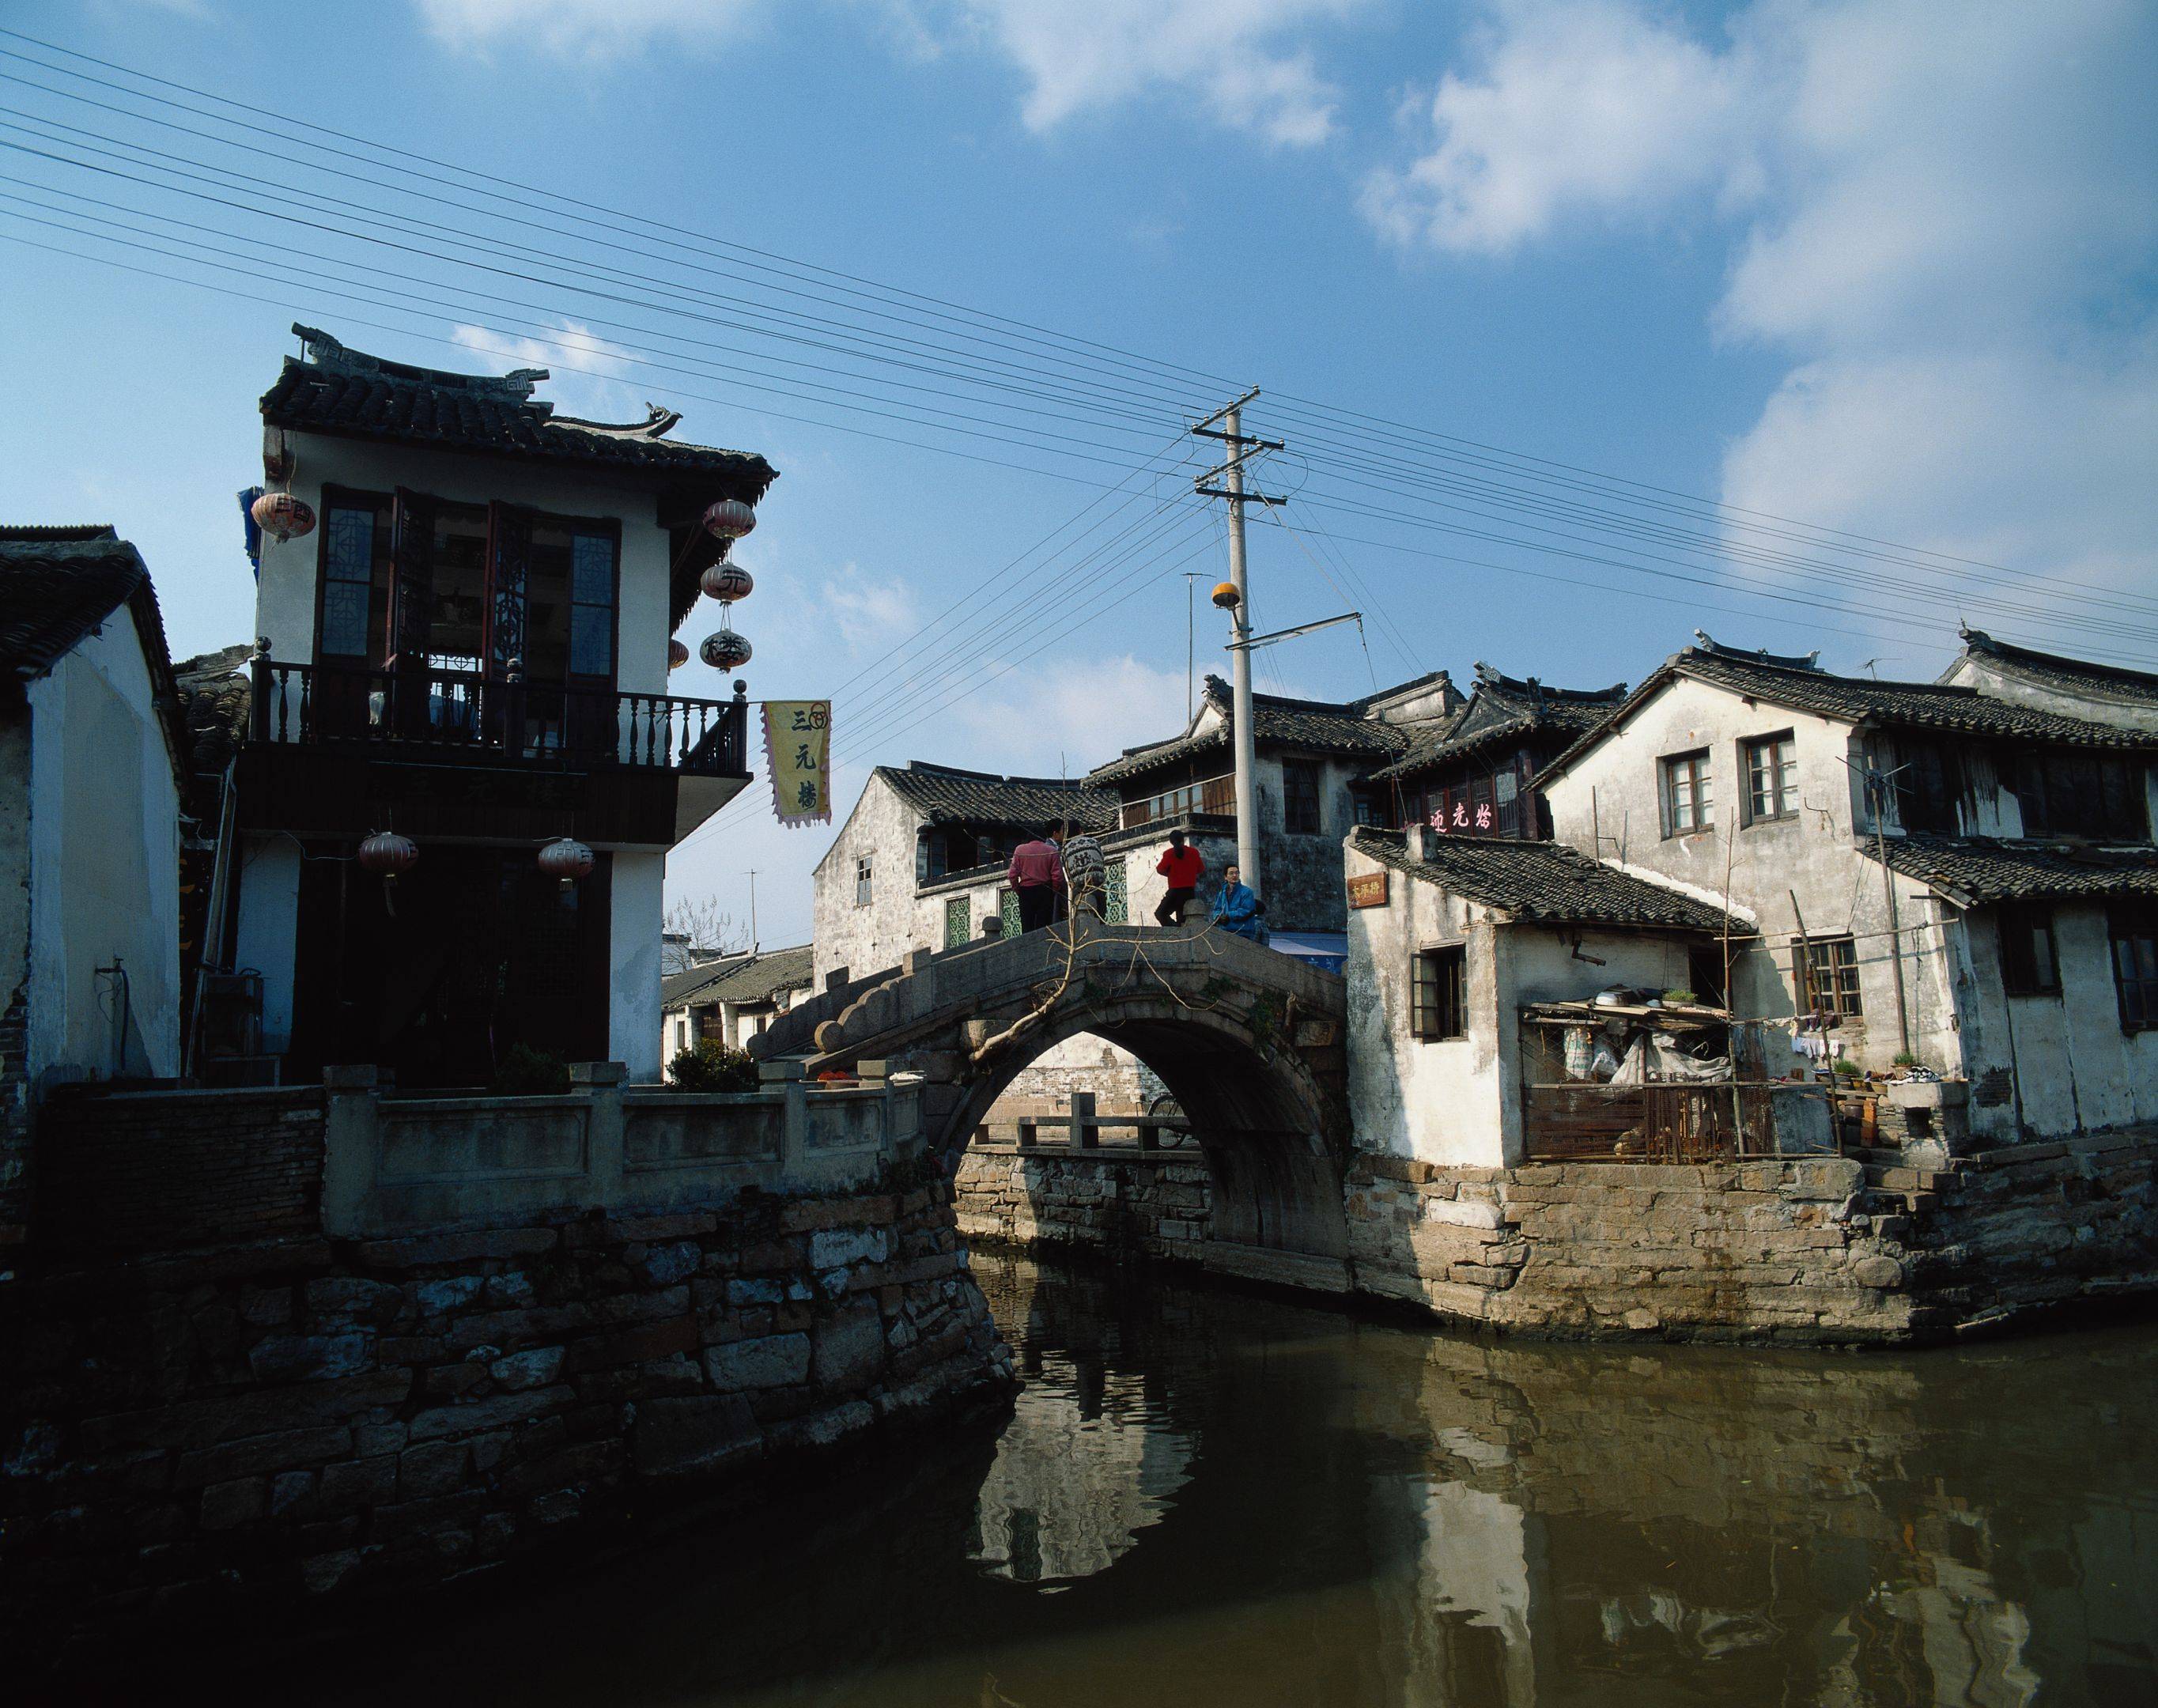 City tour a Suzhou